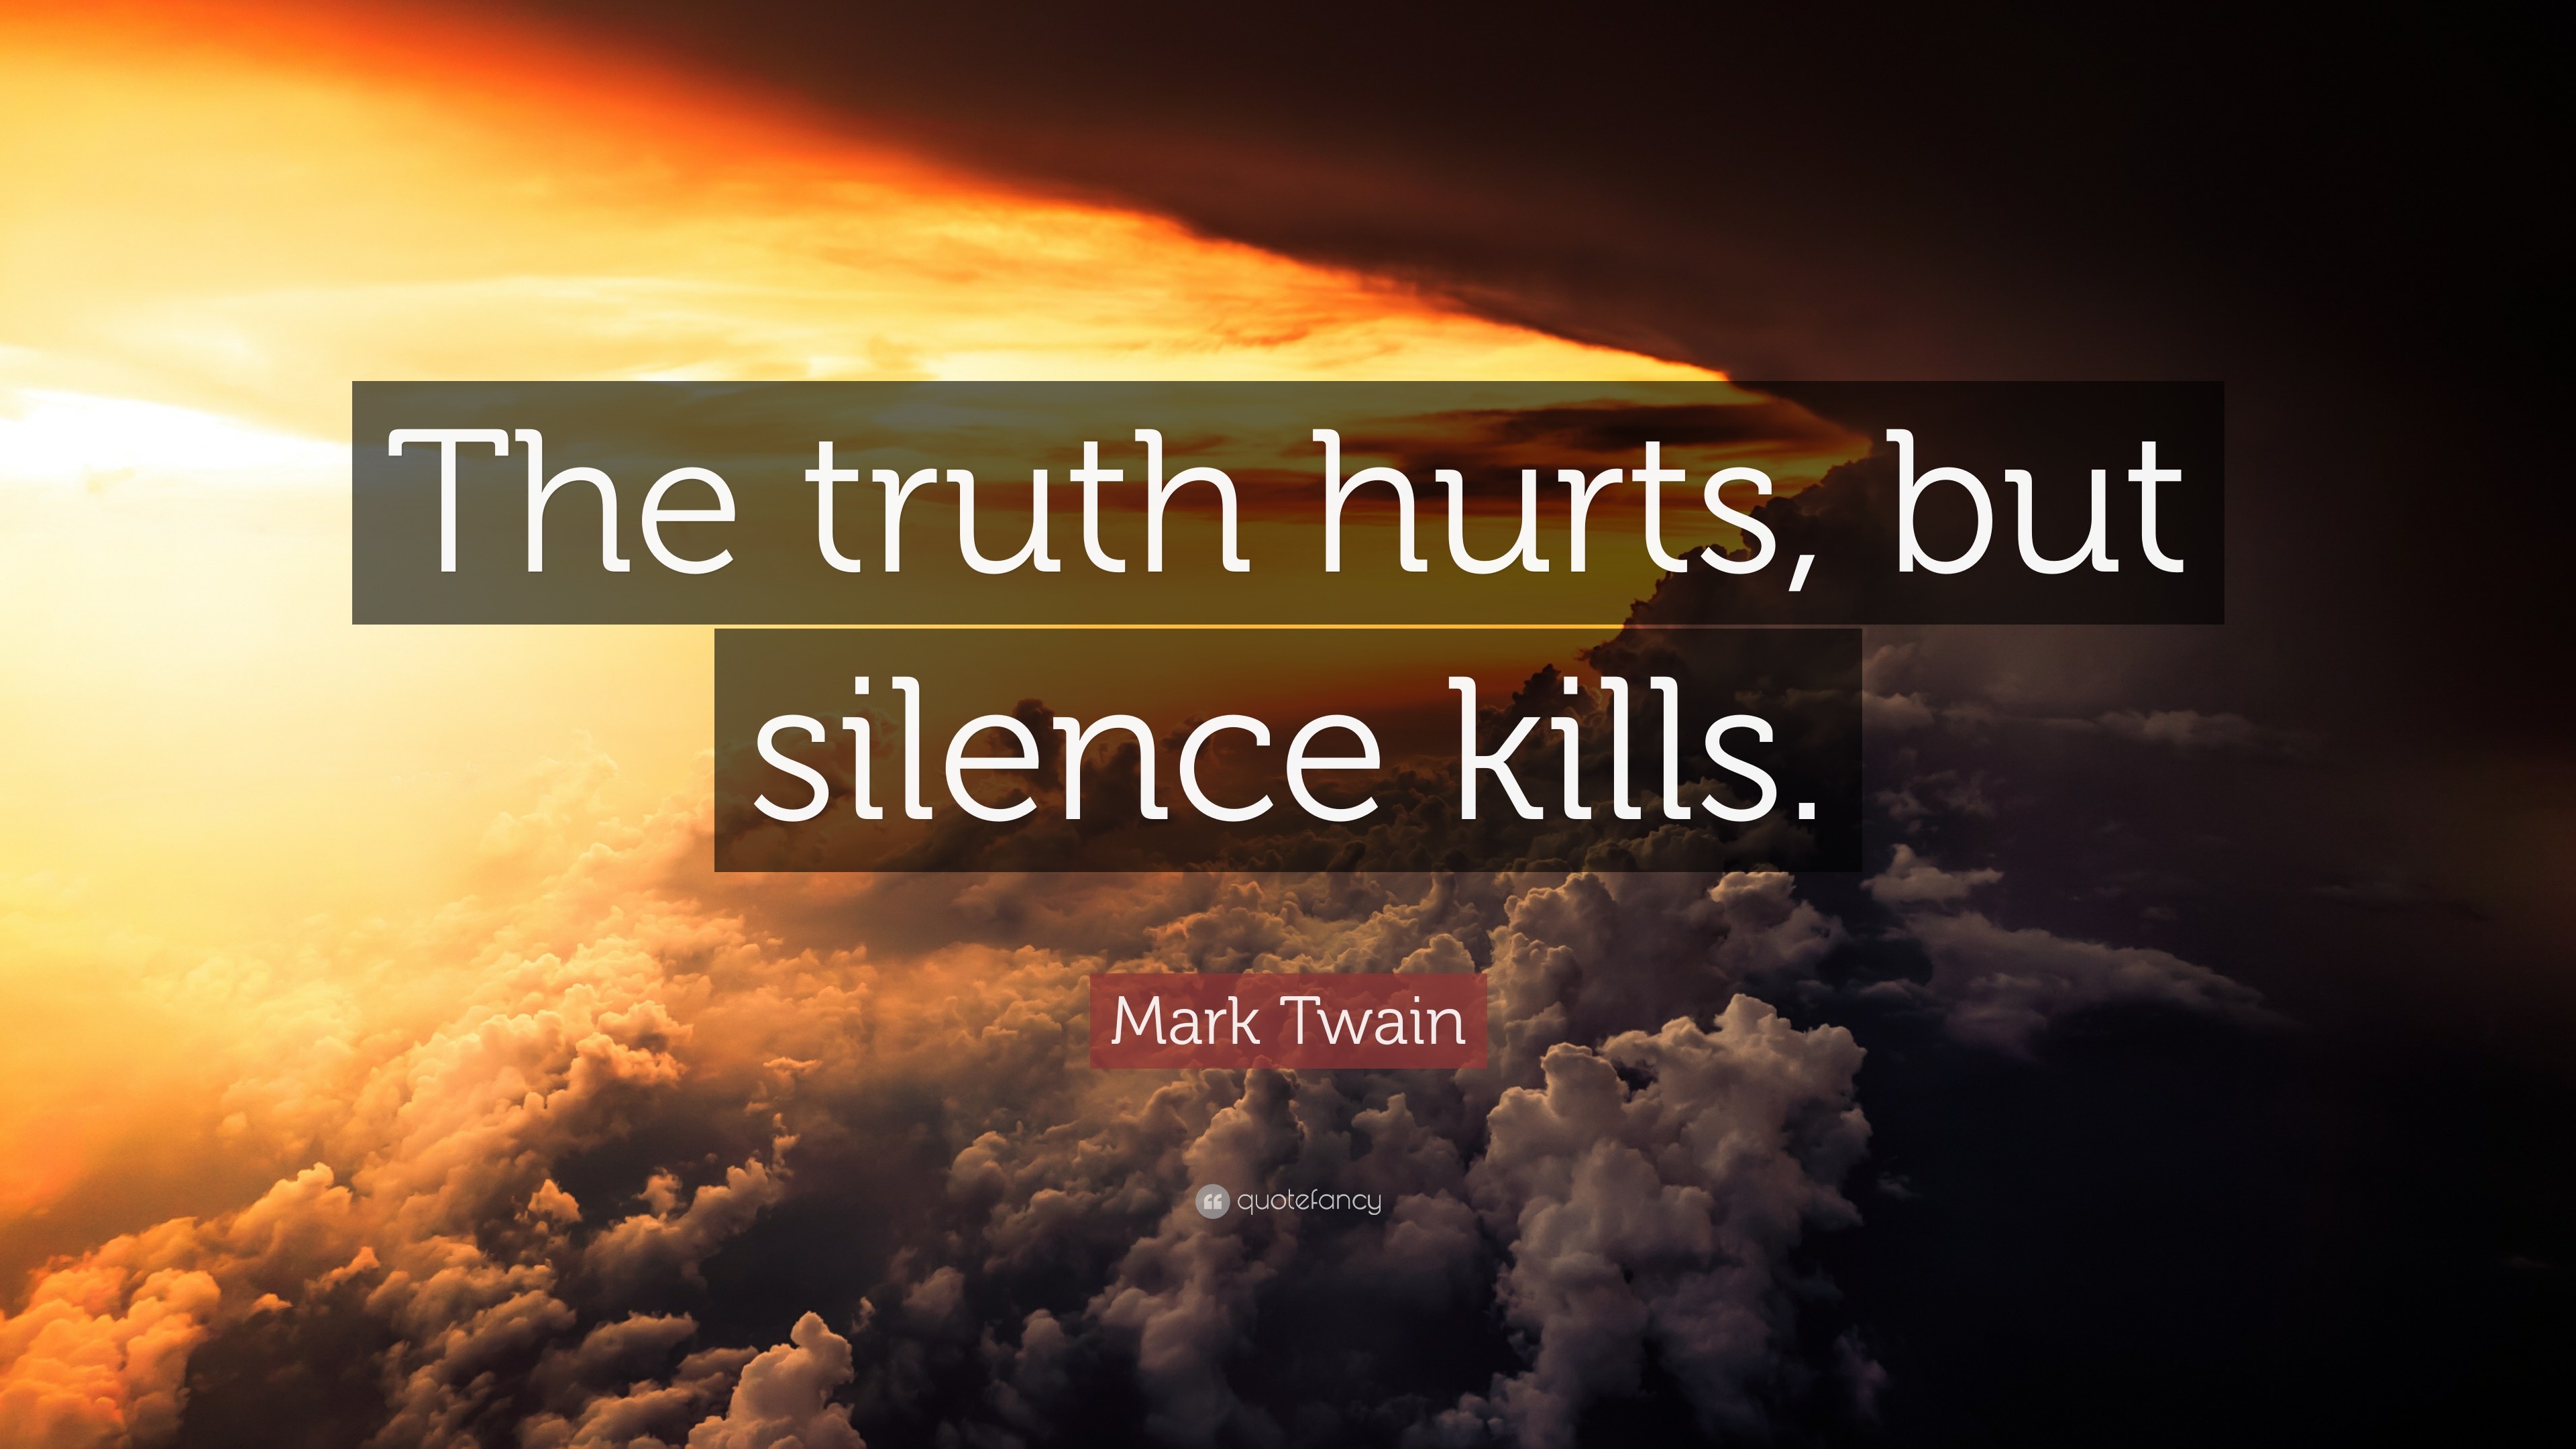 Mark Twain Quote: "The truth hurts, but silence kills ...